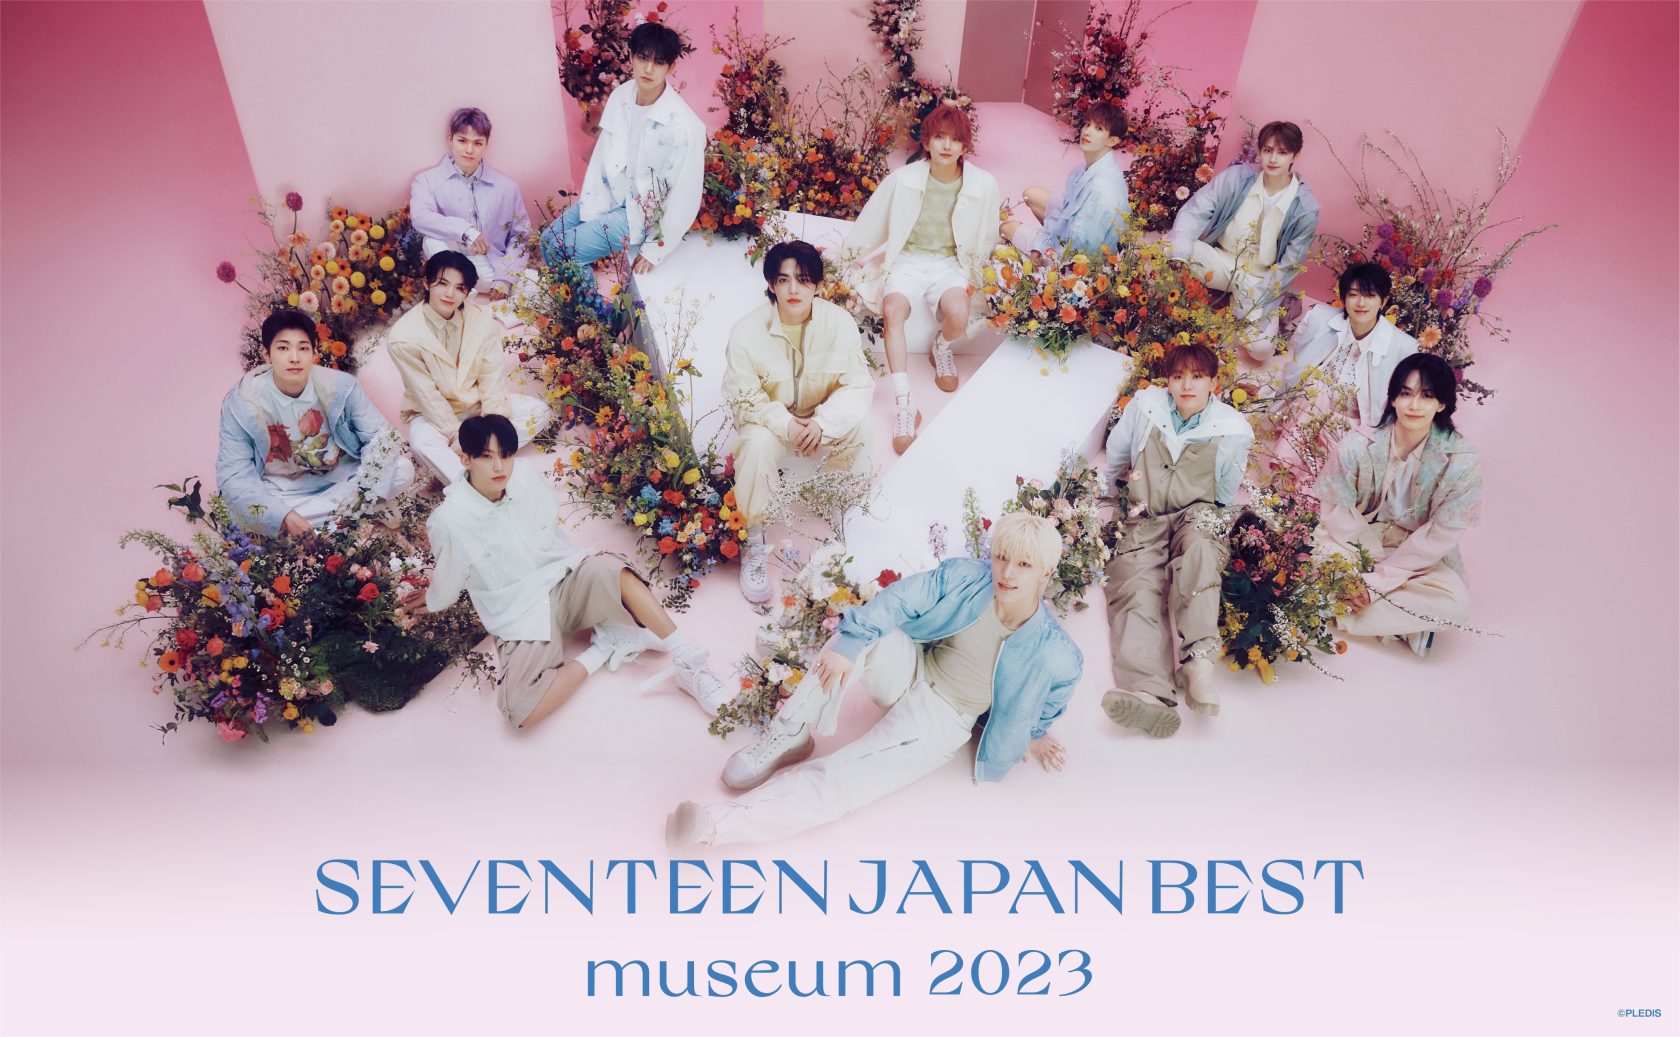 SEVENTEEN 日本ベストアルバム発売記念企画展が全国のhmv museumで開催決定!